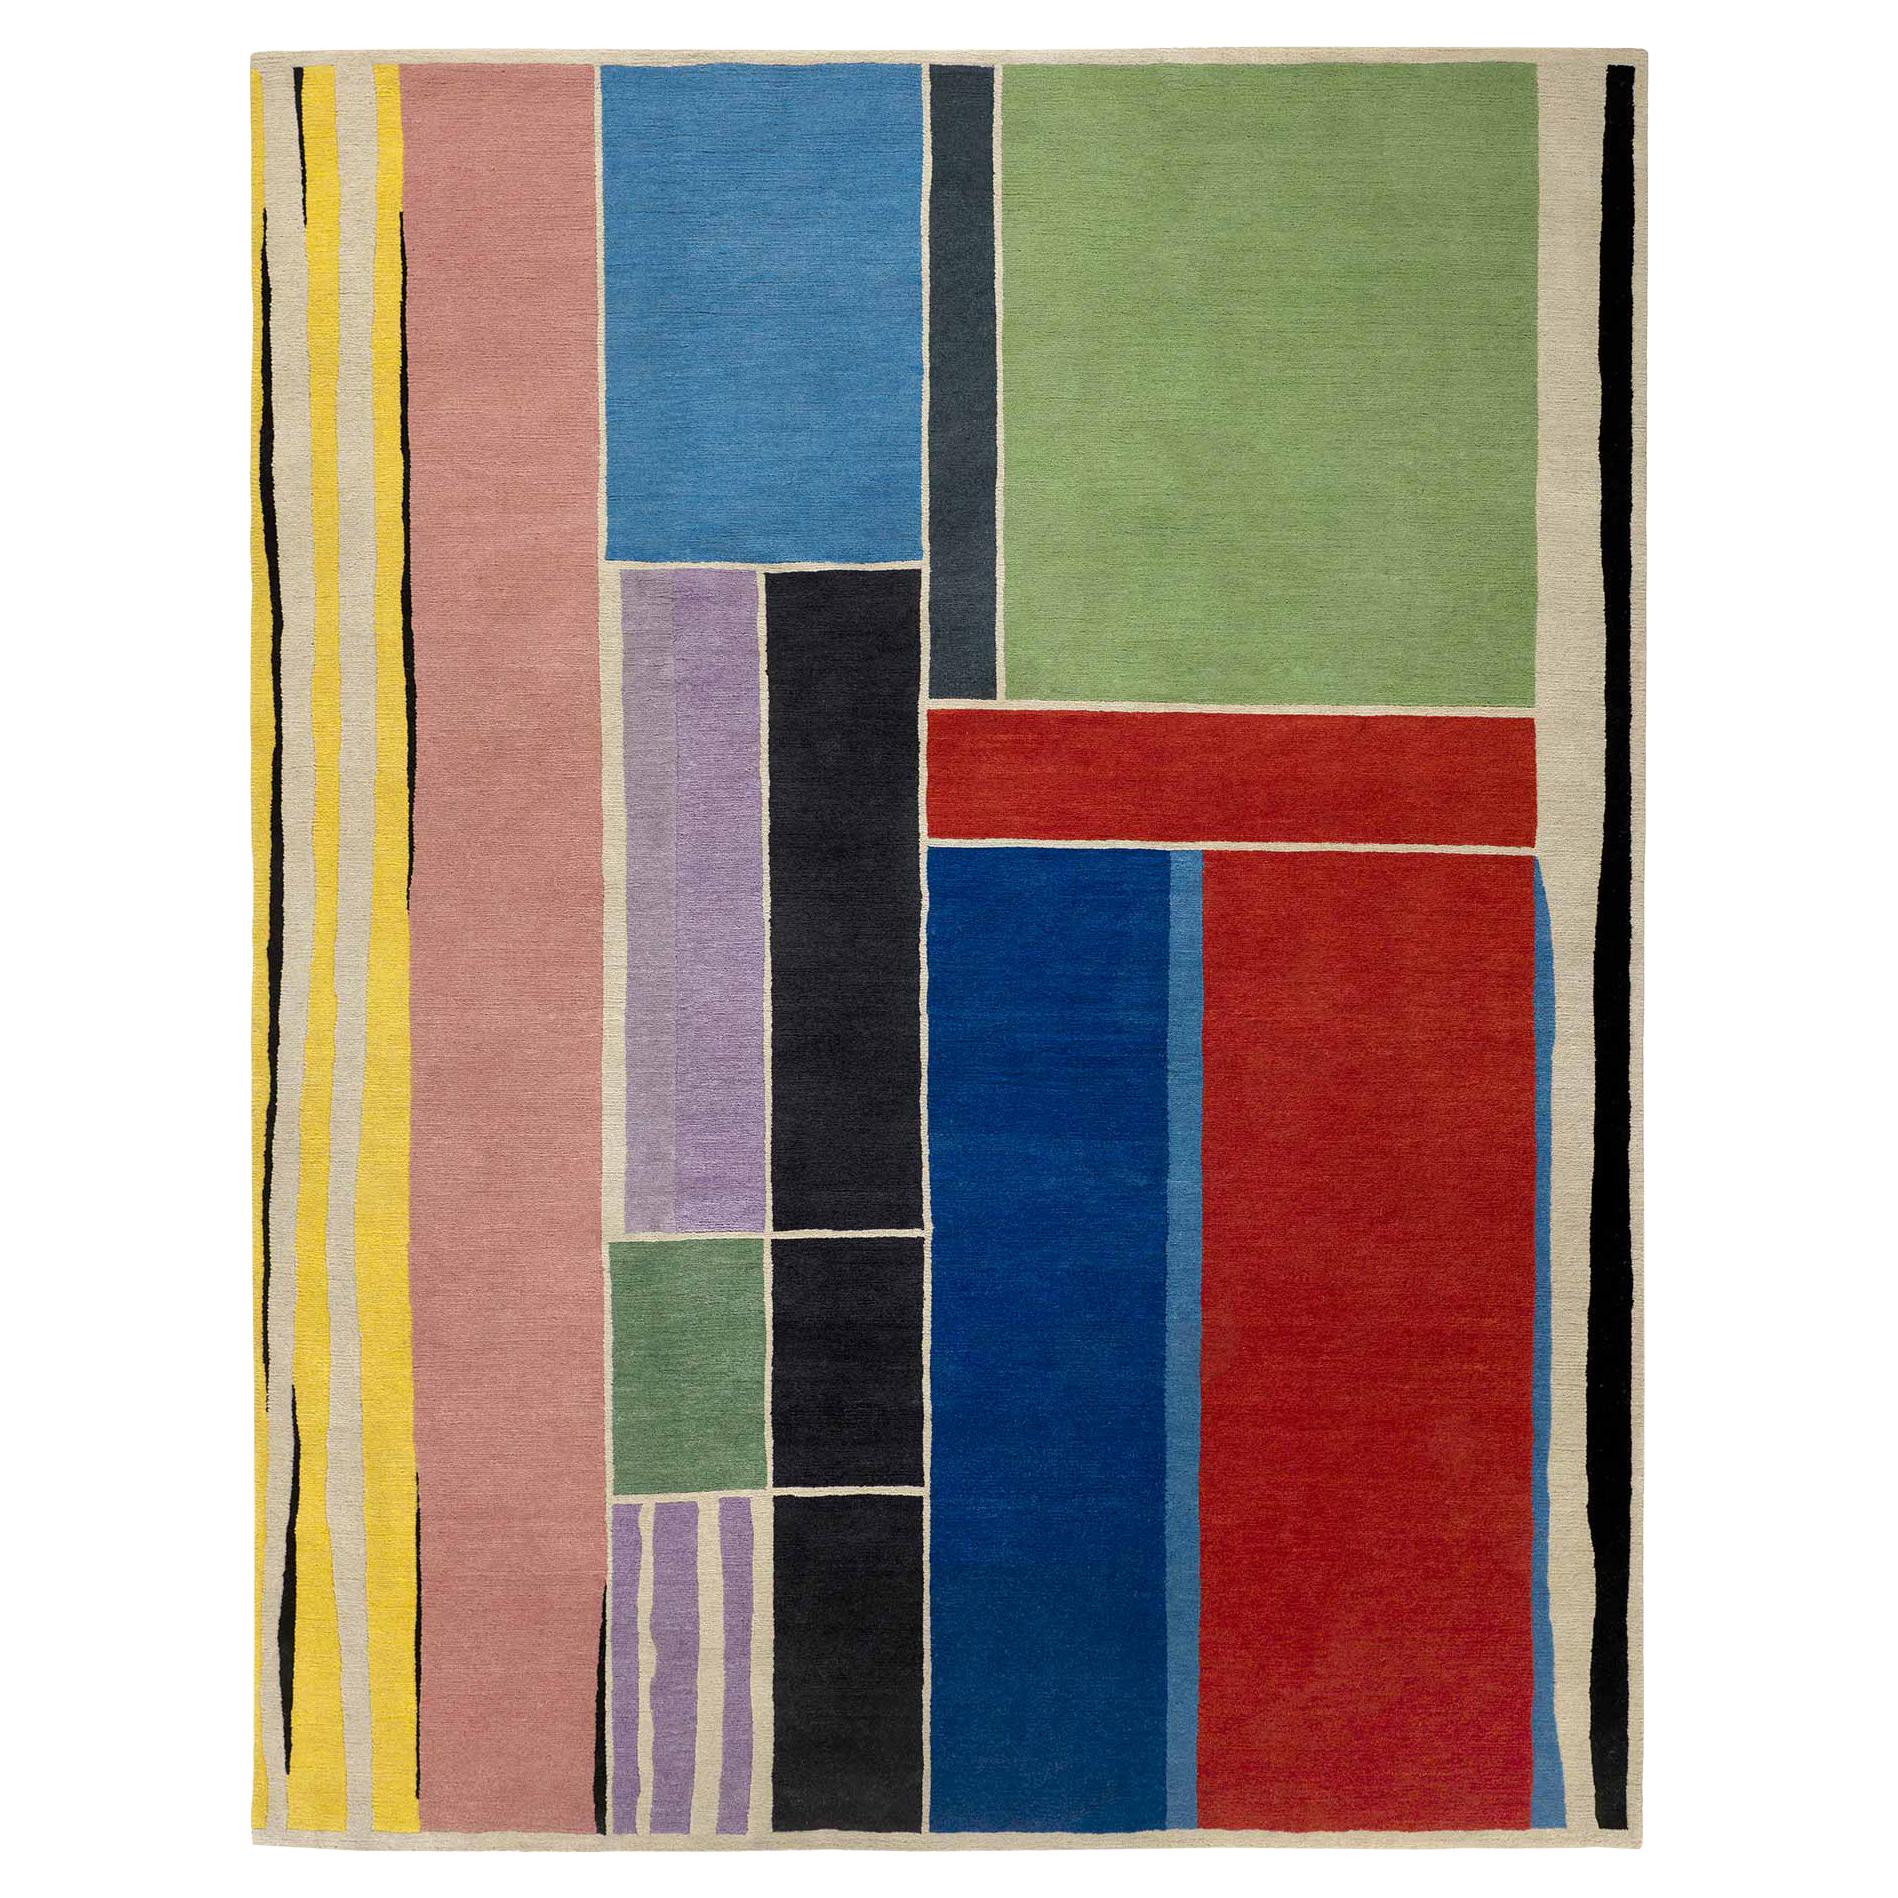 Sedona Woollen Carpet by Roger Selden for Post Design Collection/Memphis